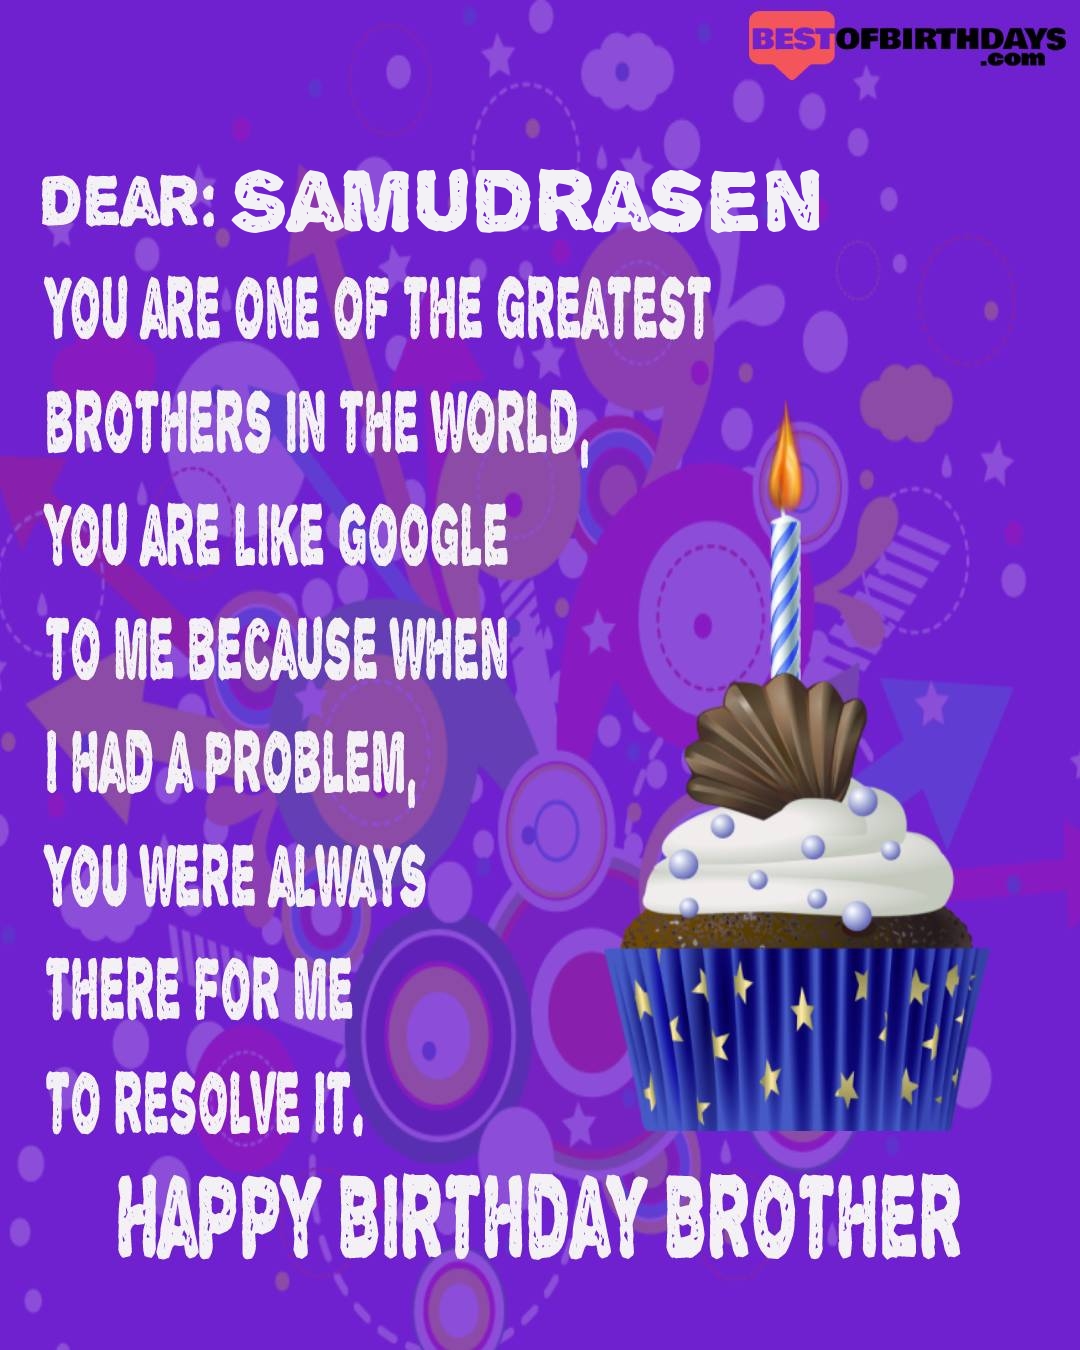 Happy birthday samudrasen bhai brother bro